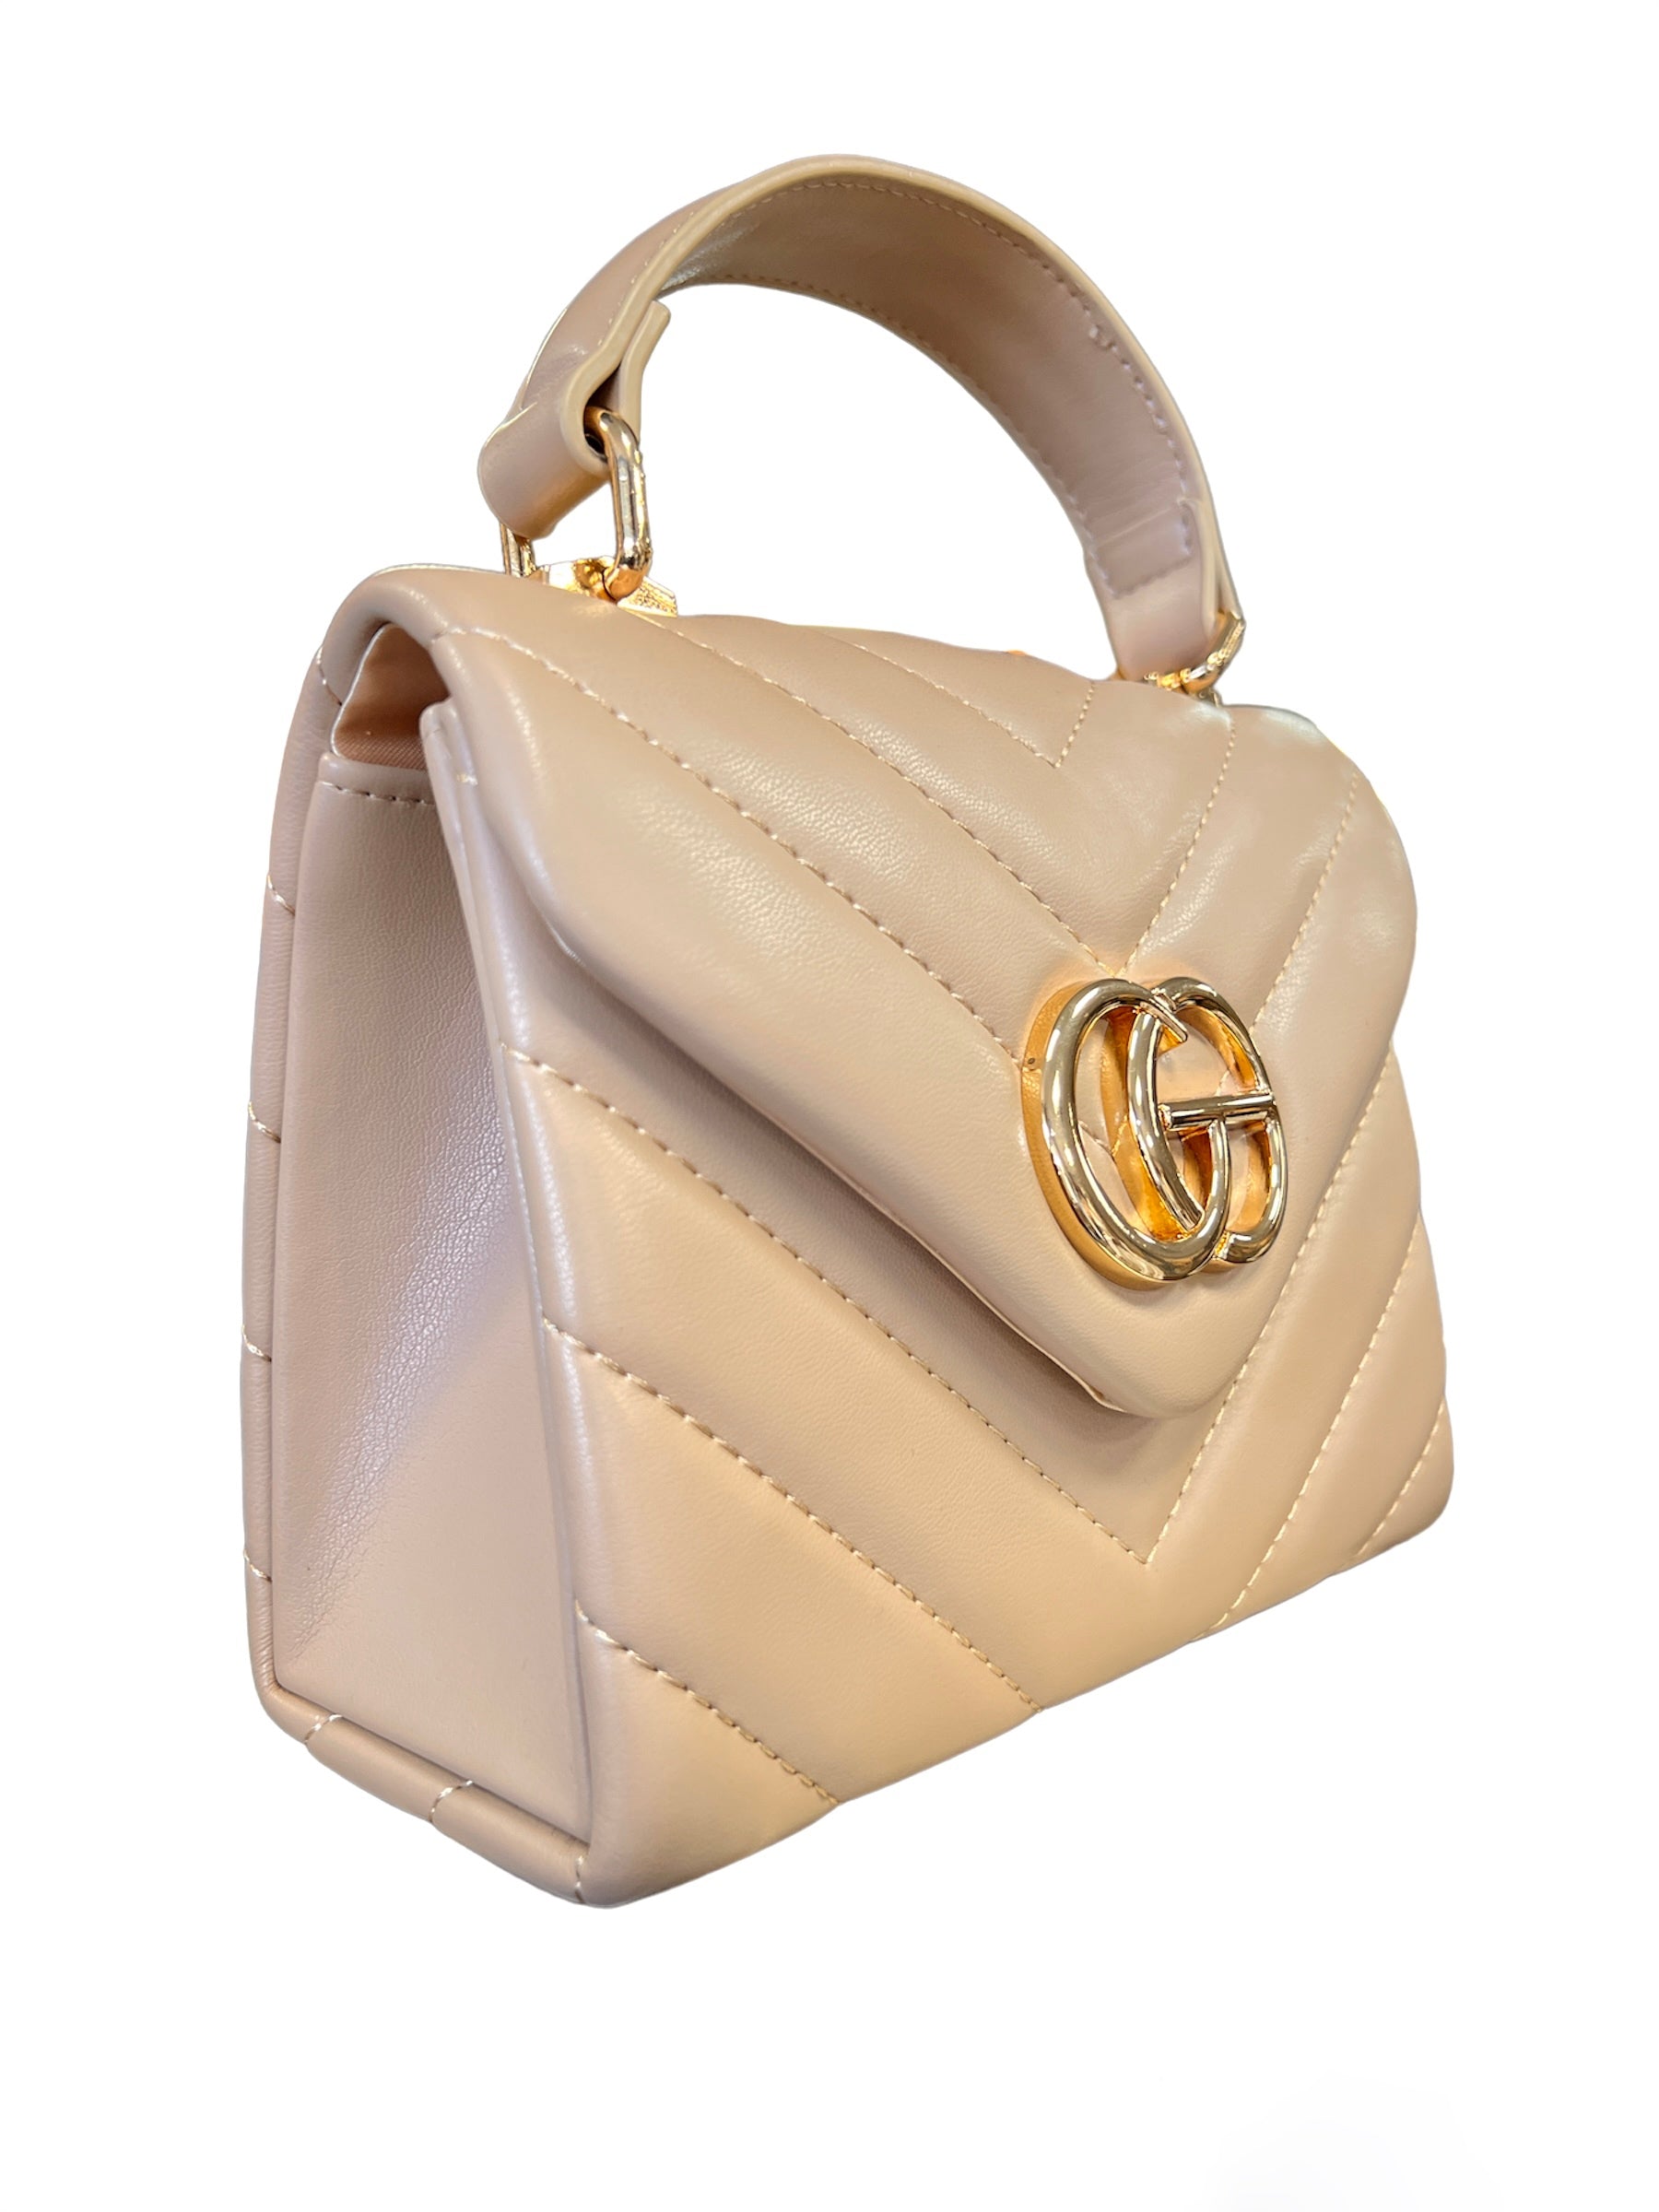 GG purse